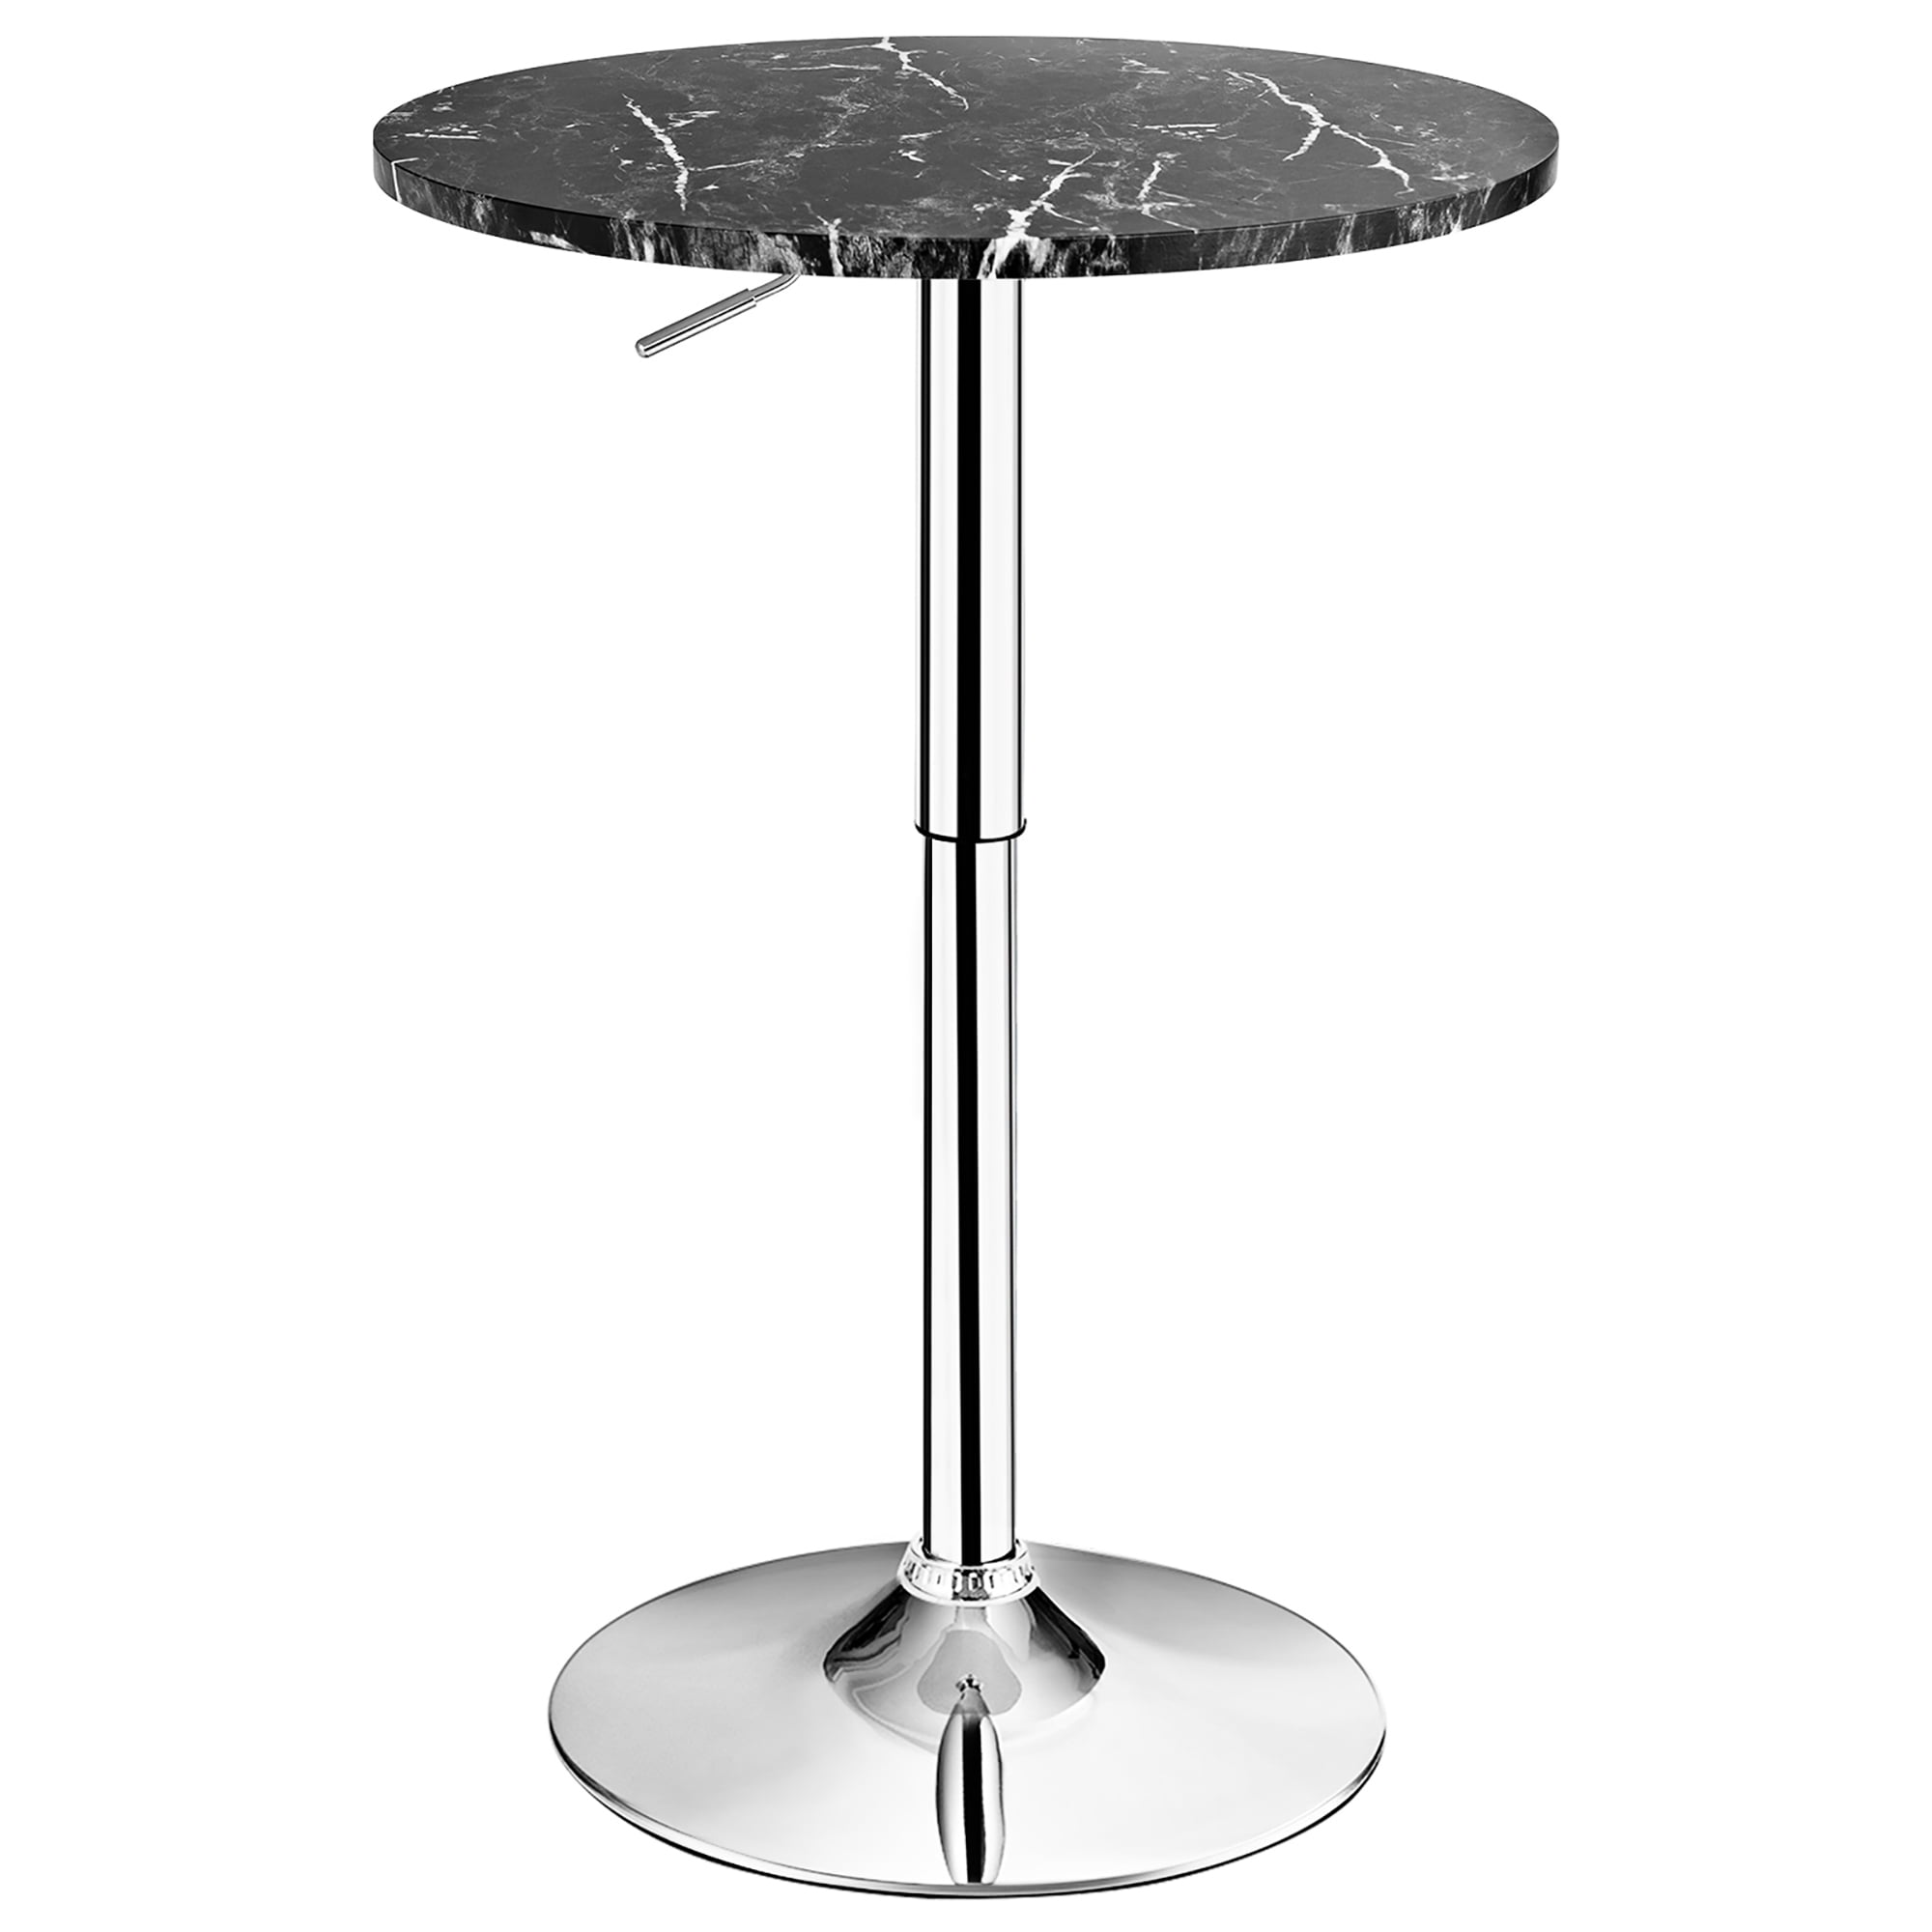 Bistro Table Small Adjustable Square Pub Tables 360° Swivel Bar Cafe Pedestal US 